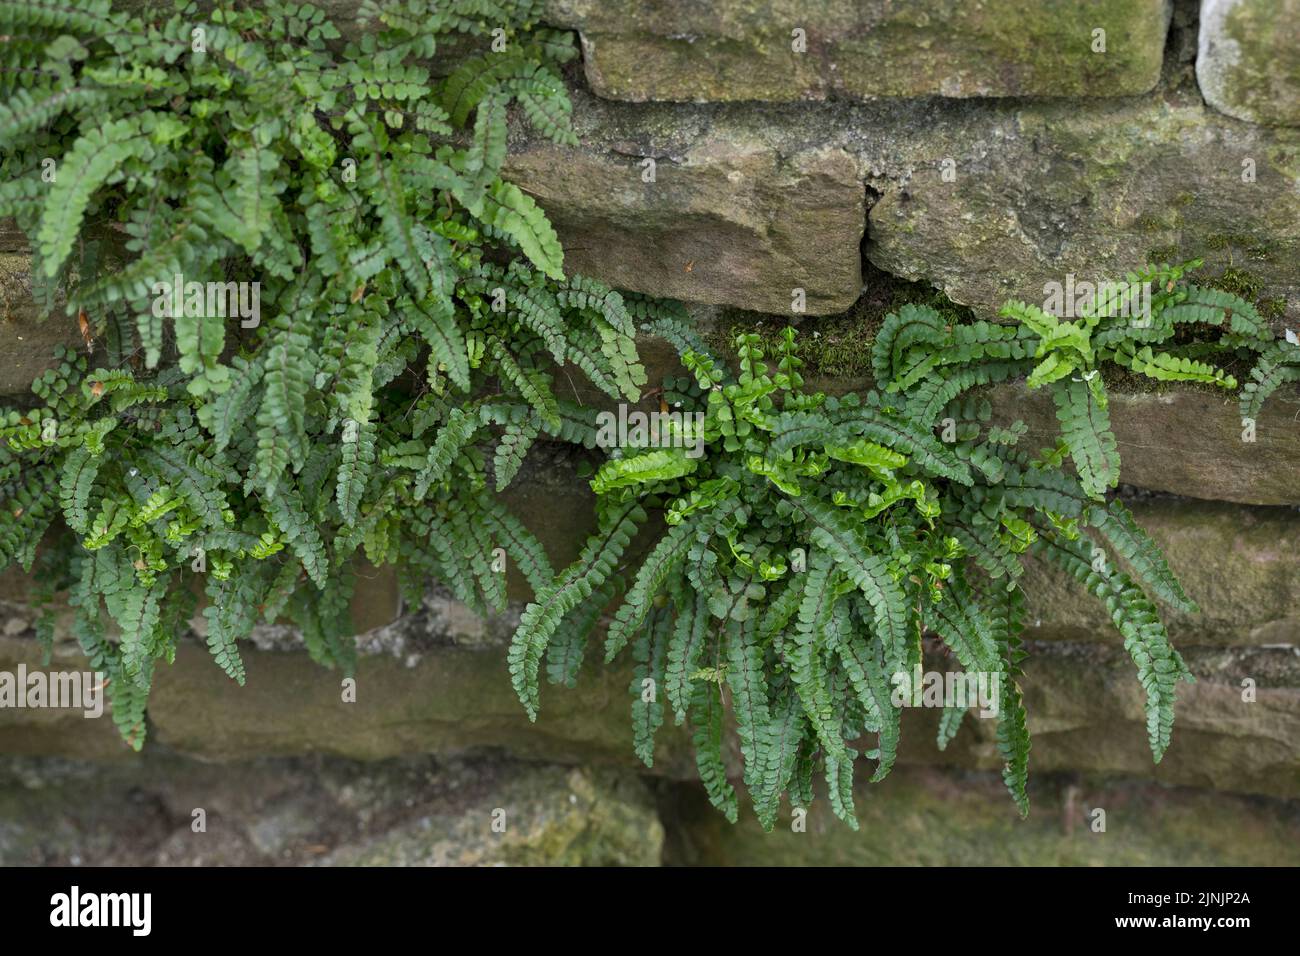 Maidenhair spleenwort, Maidenhair común (Asplenium trichomanes), en una pared seca de piedra antigua, Alemania Foto de stock